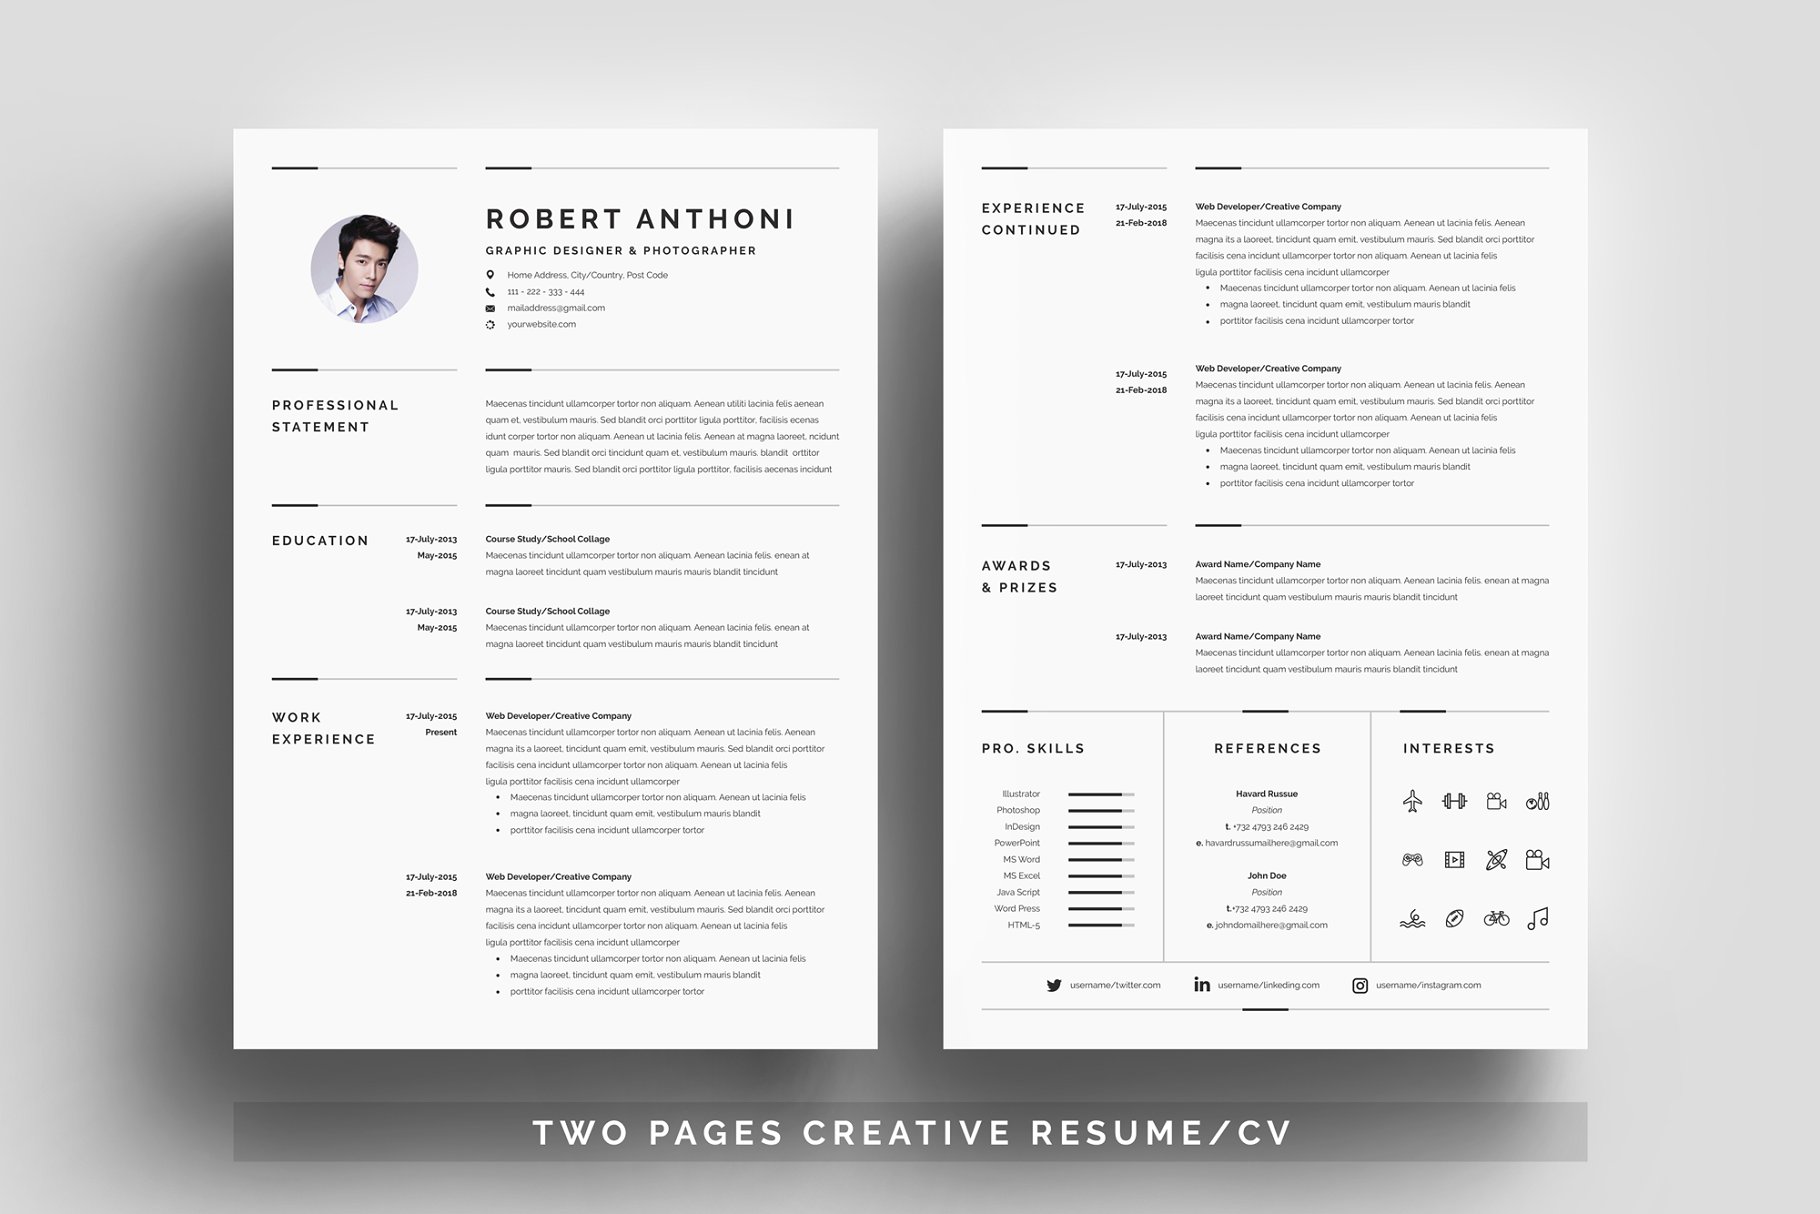 创意个人求职简历模板 Creative Resume Template 3 Pages插图2